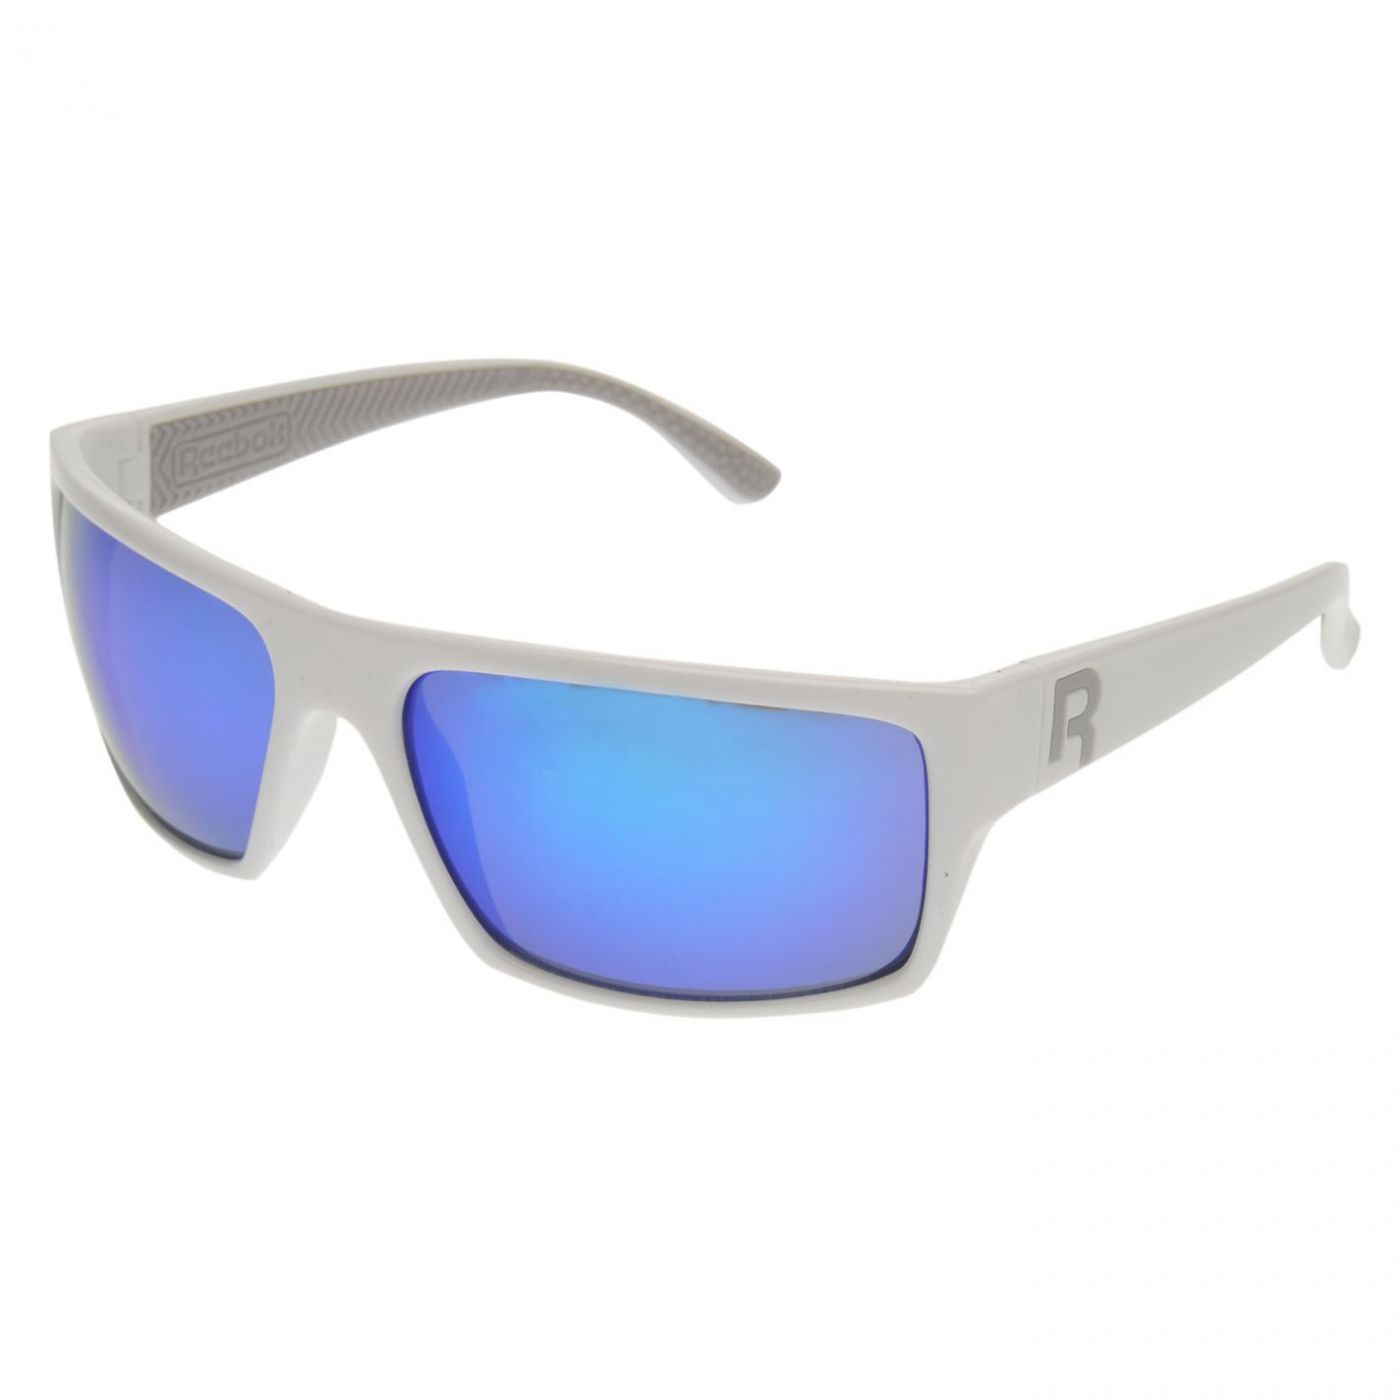 reebok classic 4 sunglasses